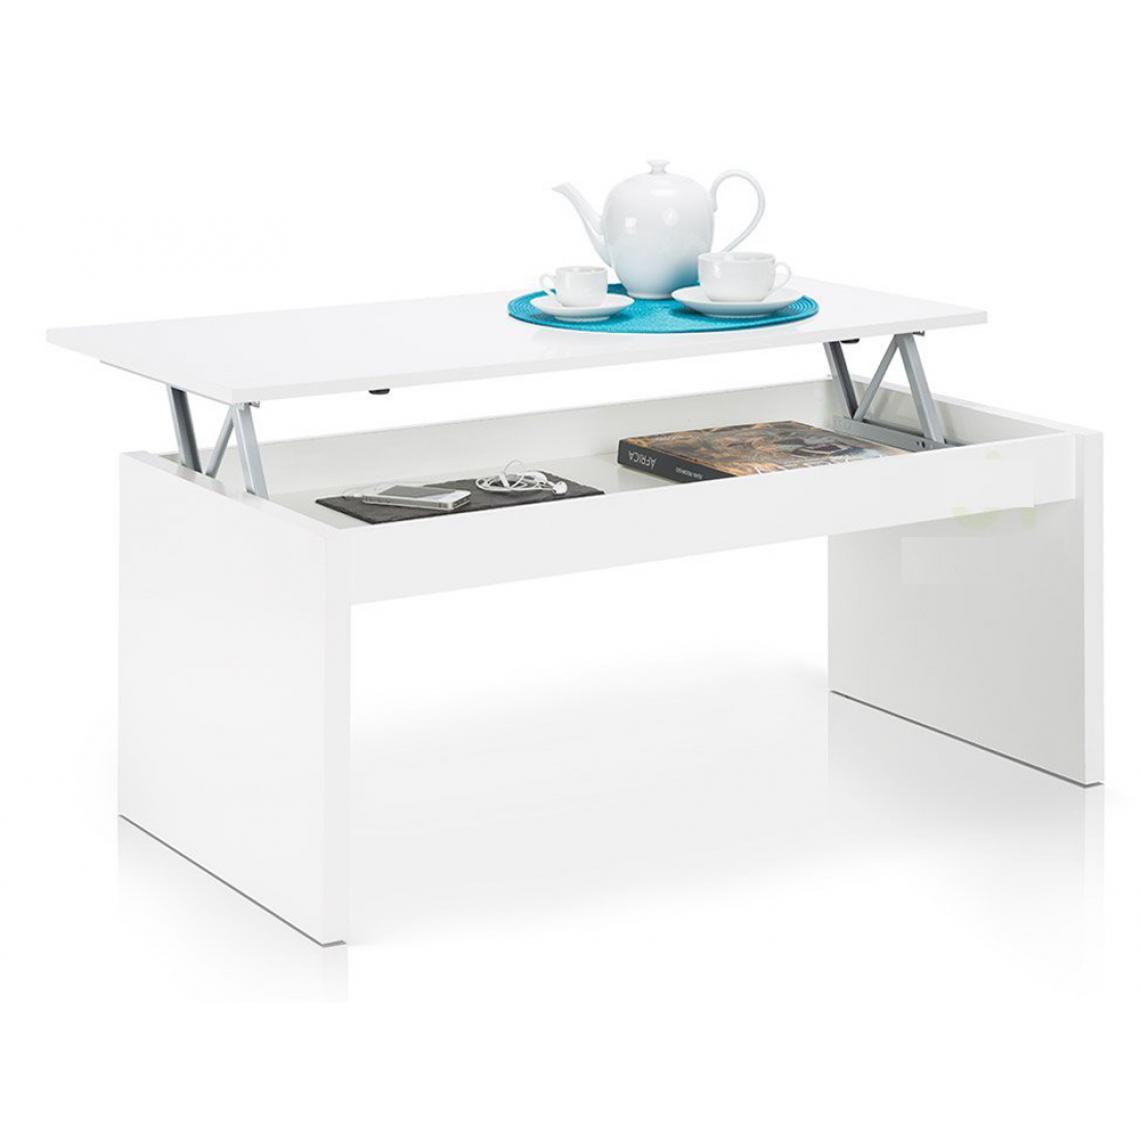 Pegane - Table Basse Blanc brillant Avec Plateau Relevable -PEGANE- - Tables basses